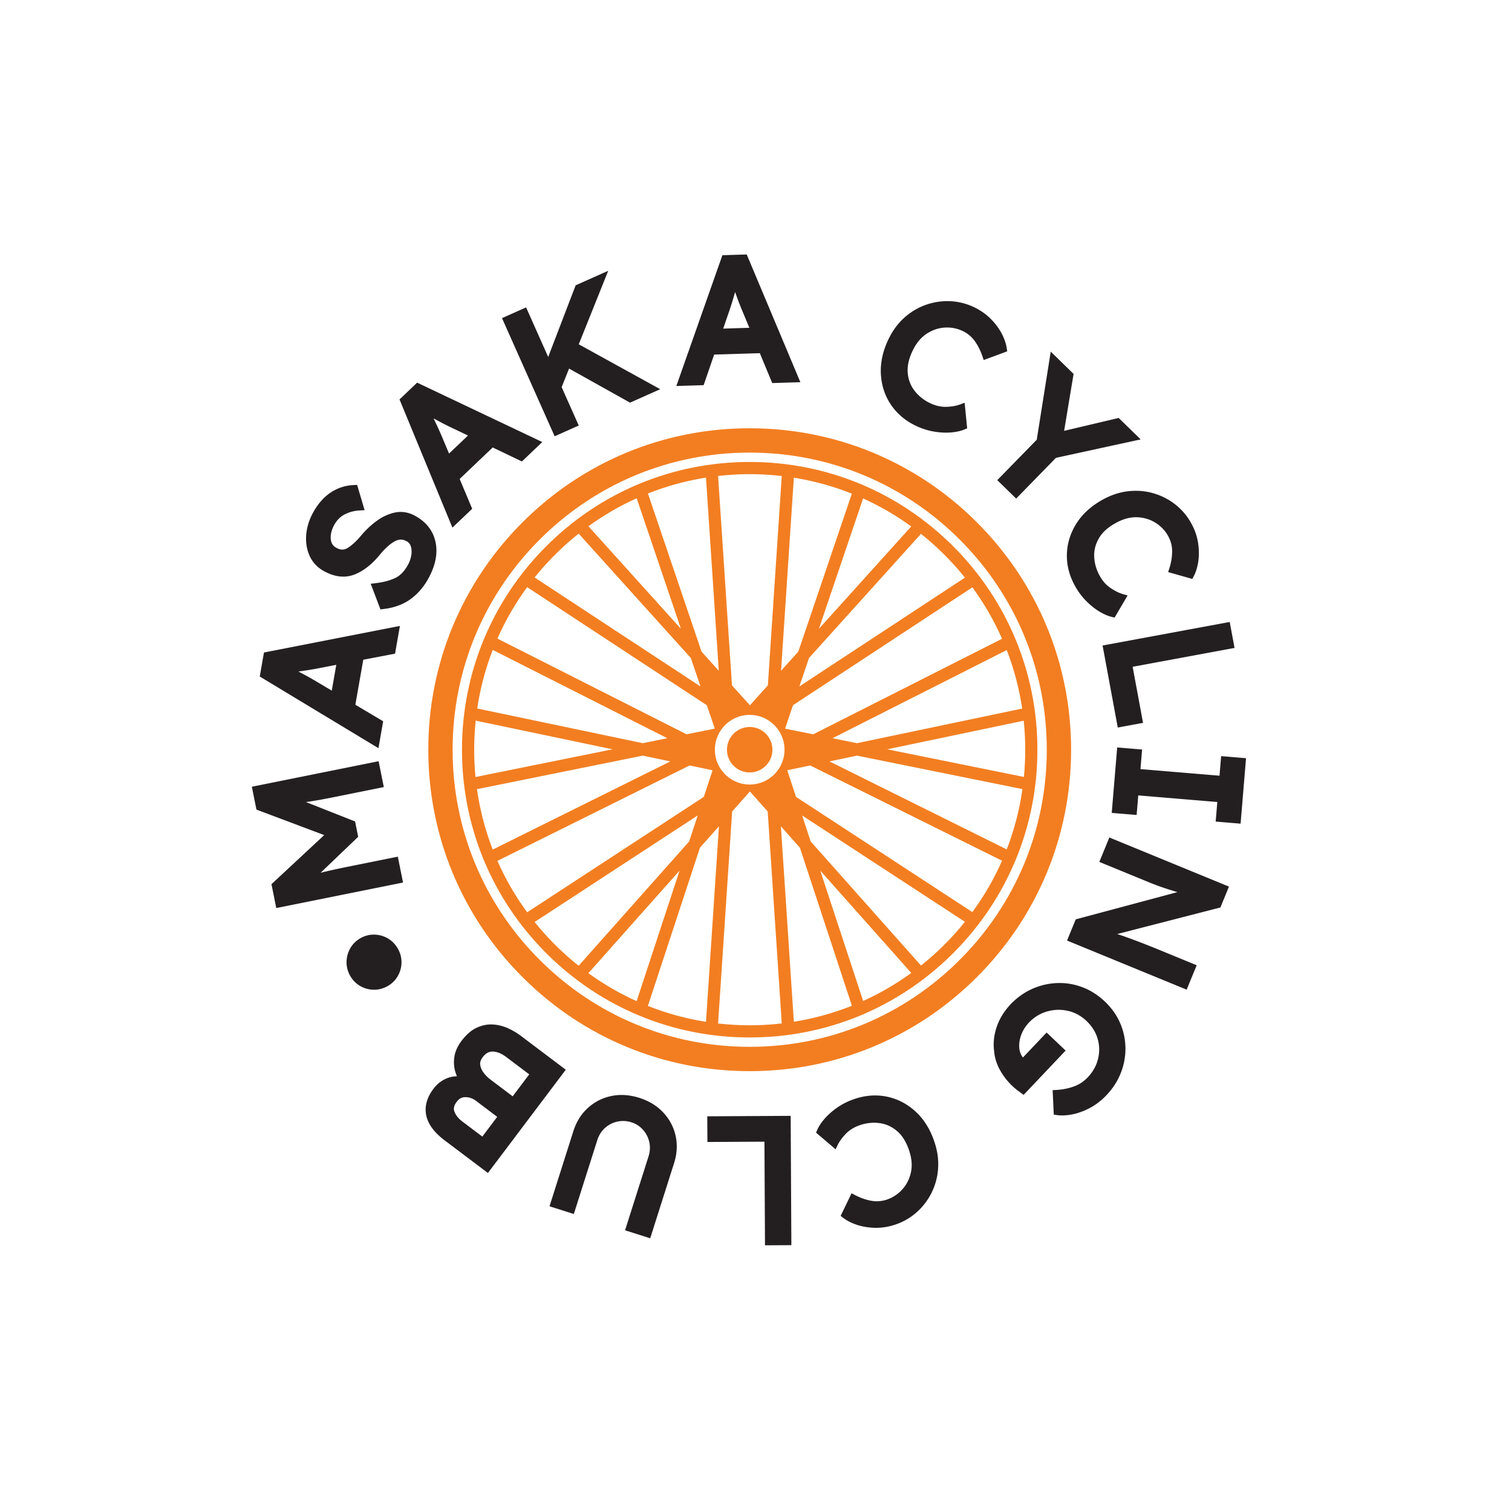 Masaka Cycling Club